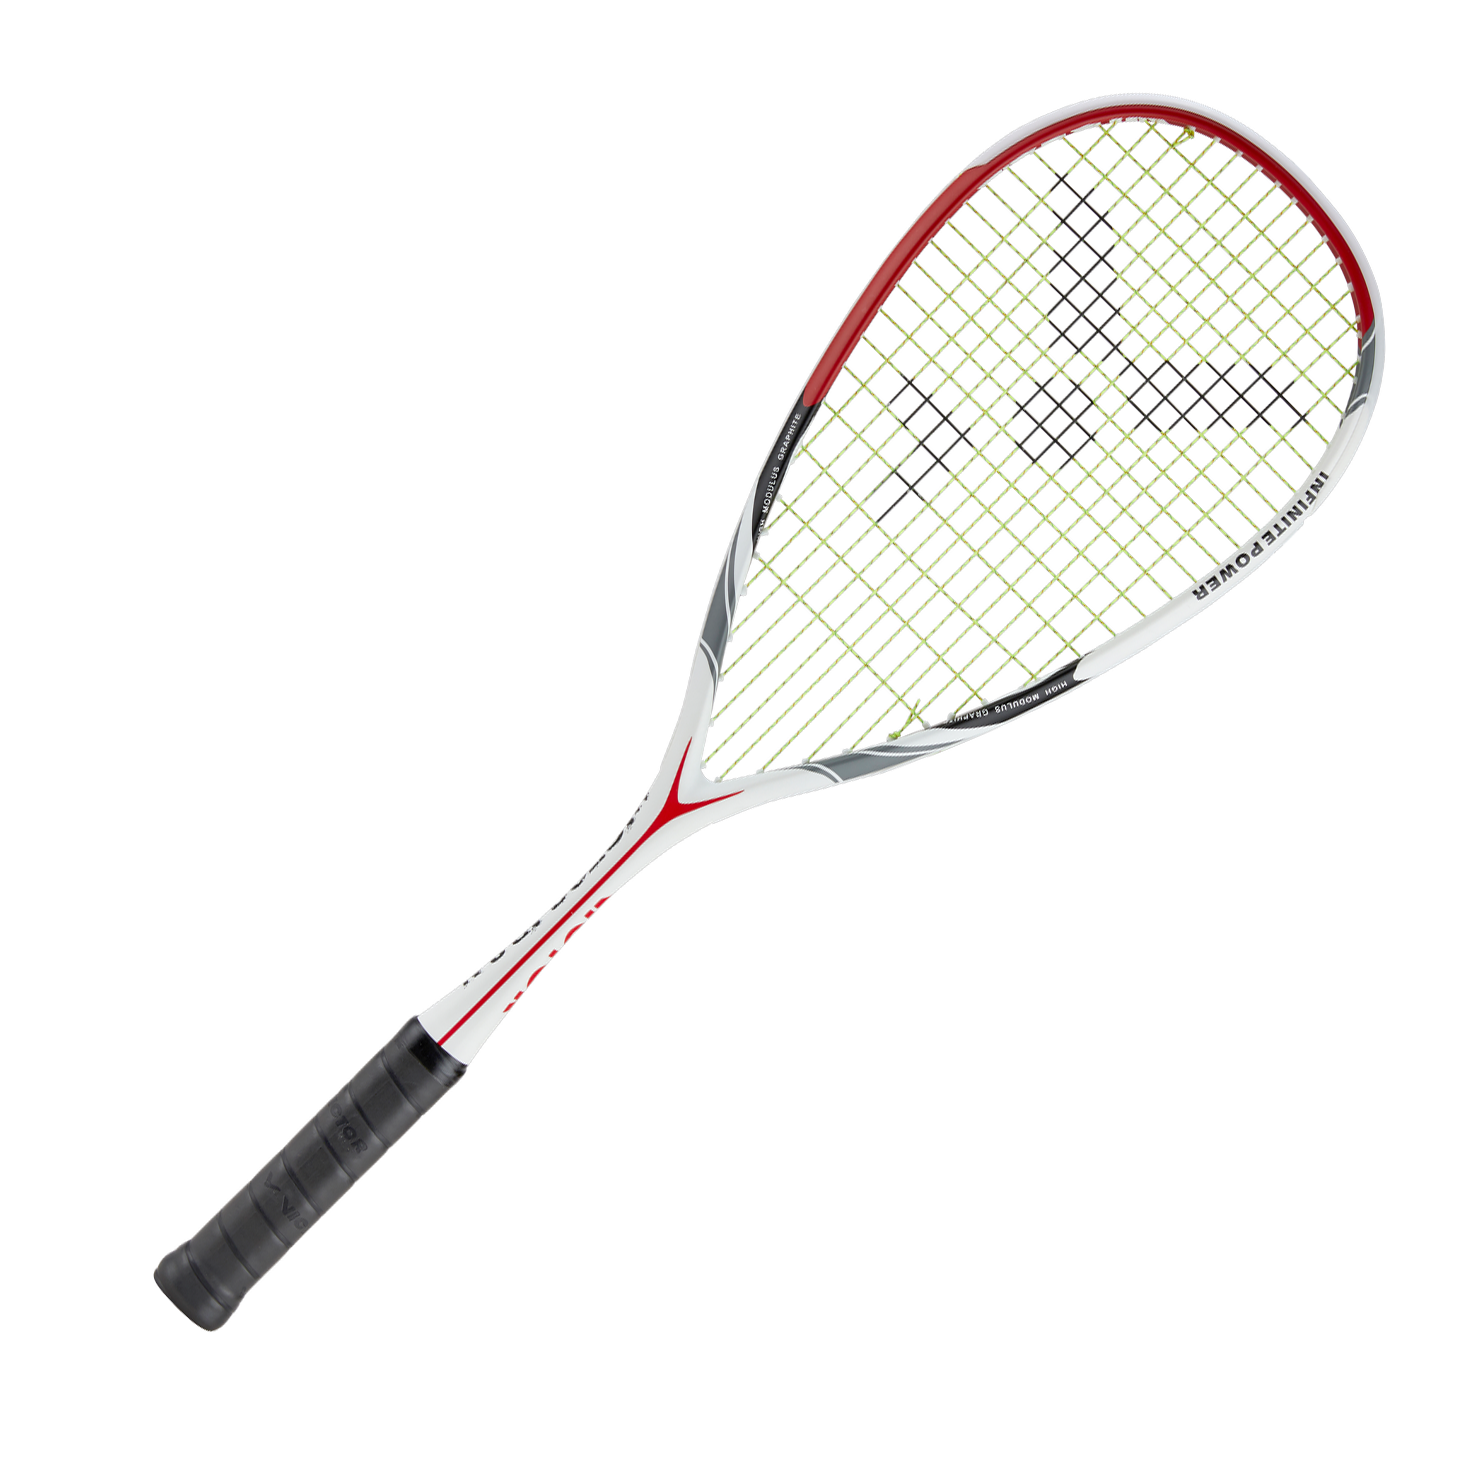 Victor IP 8N Squash Racket - White/Red